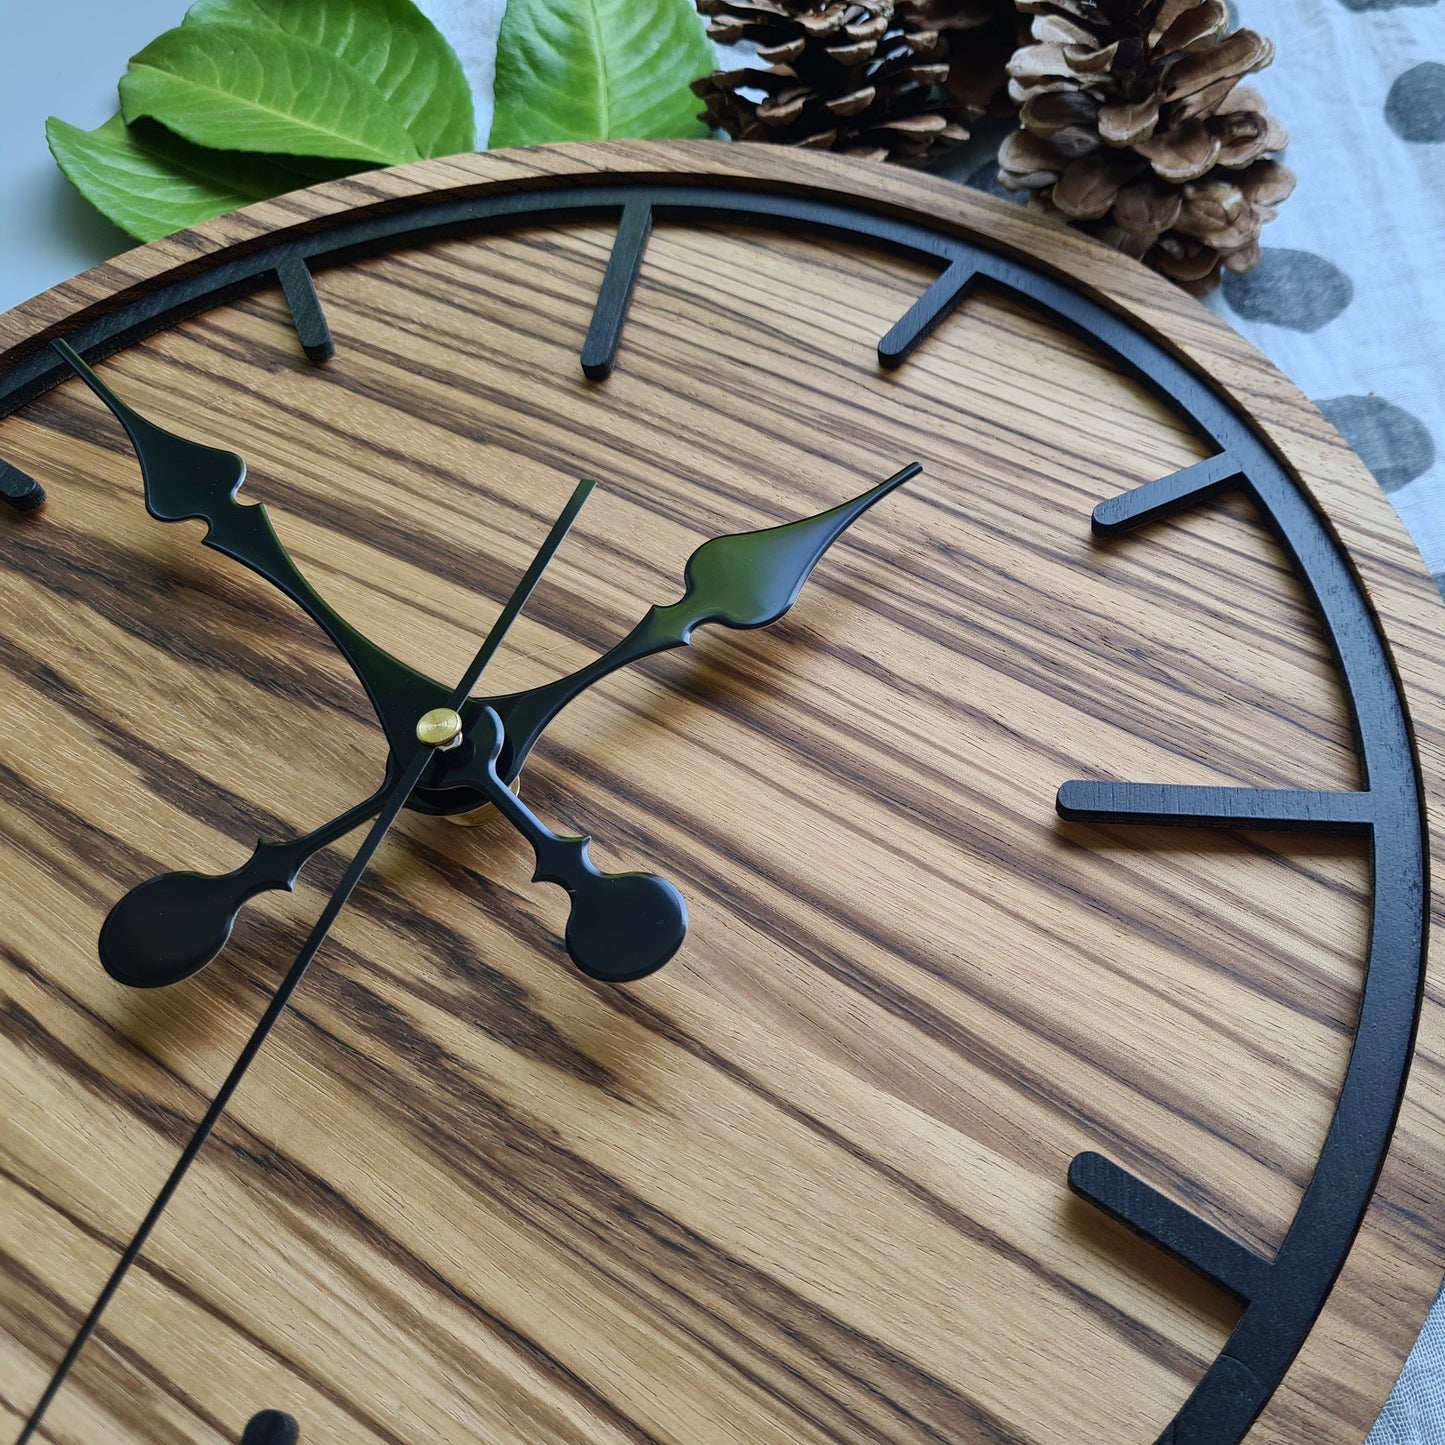 ClockDesignCo Unusual Wooden Wall Clock | Zebrano Wood | Rustic Wall Clock | Square Clock Design